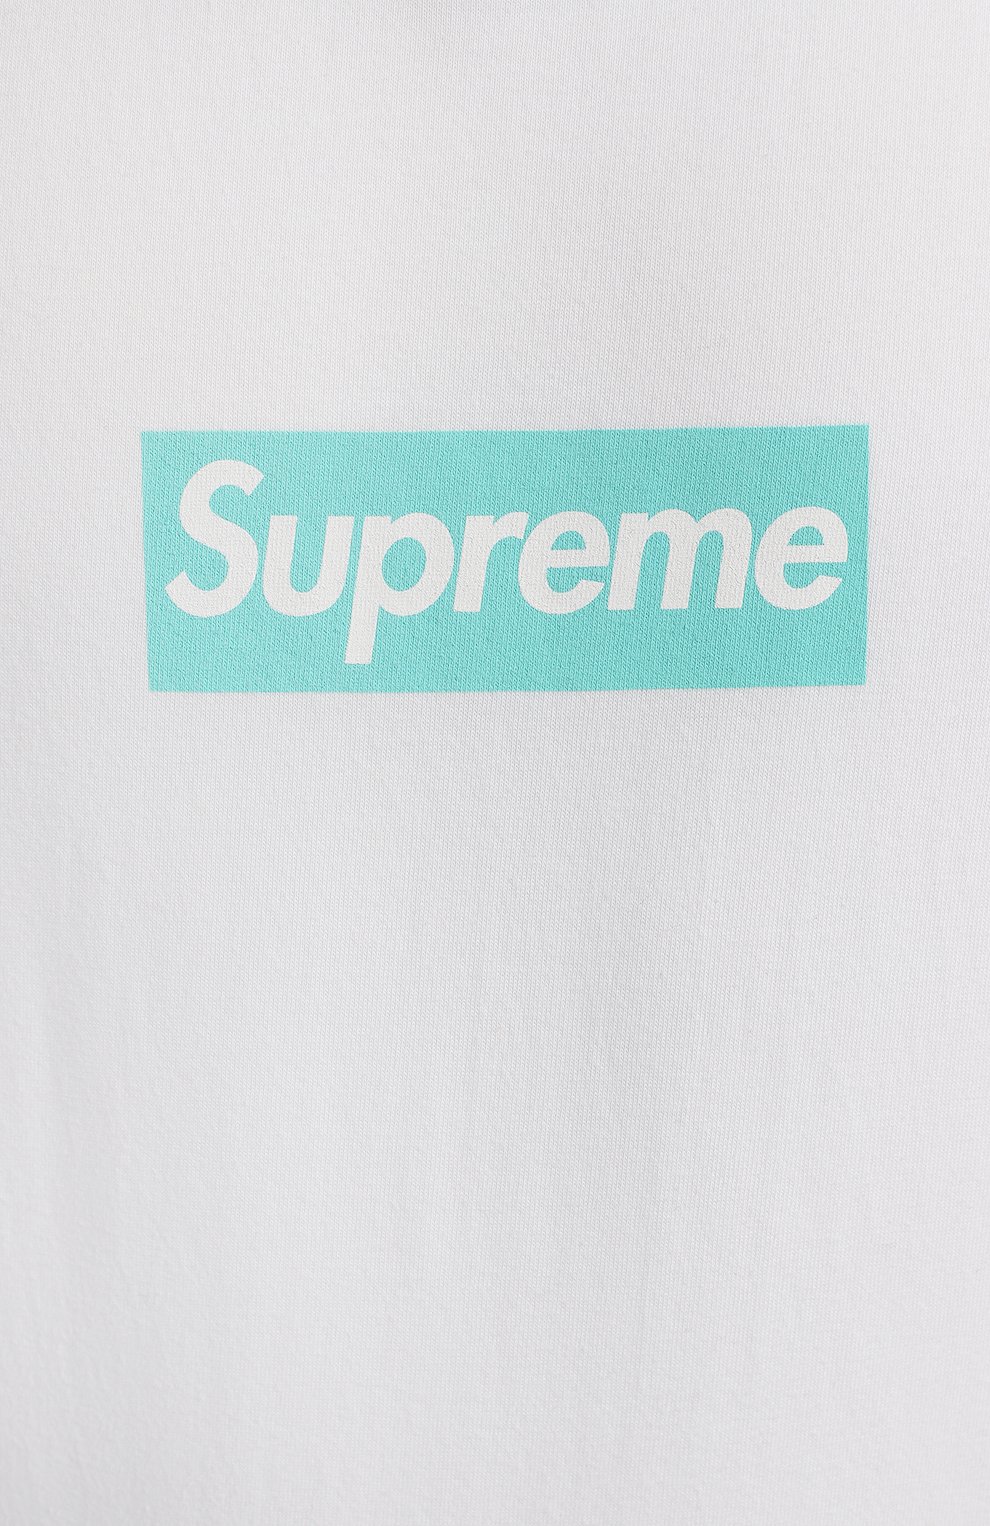 Футболка Supreme x Tiffany & Co | Supreme | Белый - 3